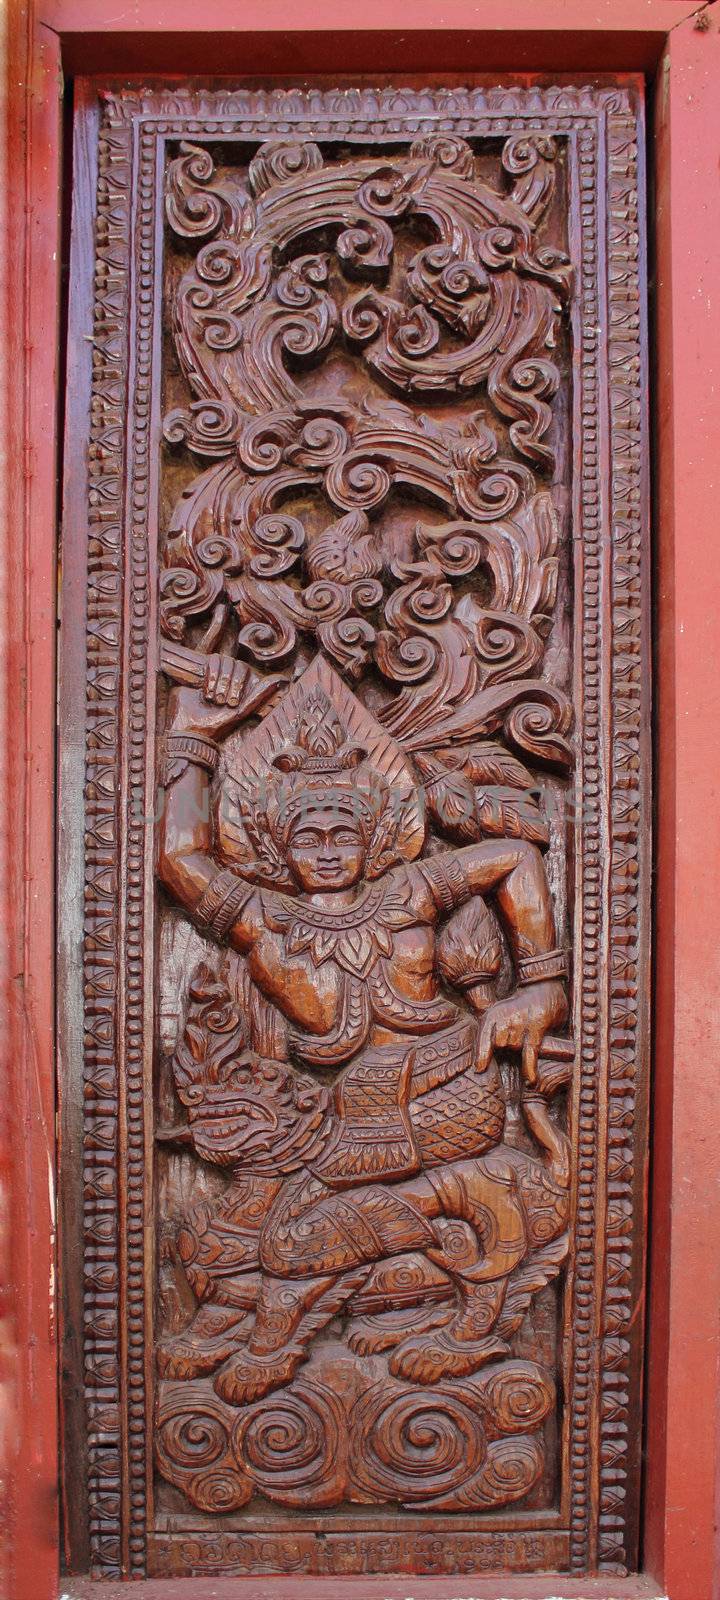 Decorated wooden beside door in Buddhist temple, Laos